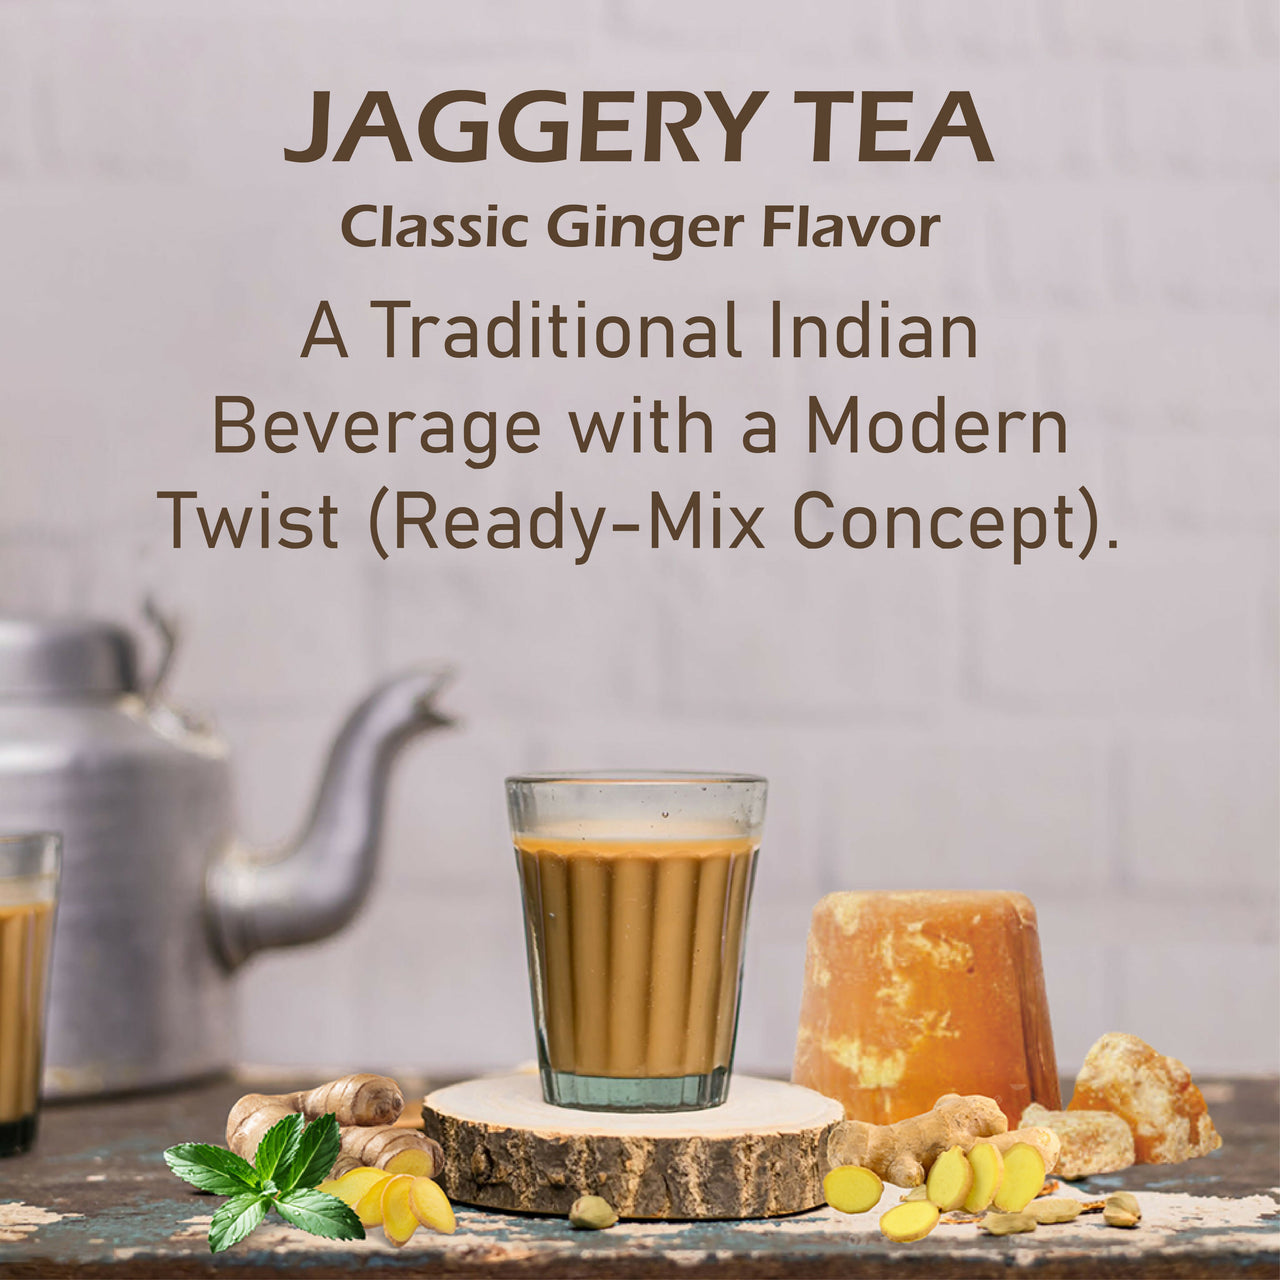 Tea Jaggery 1000x1000 px-06